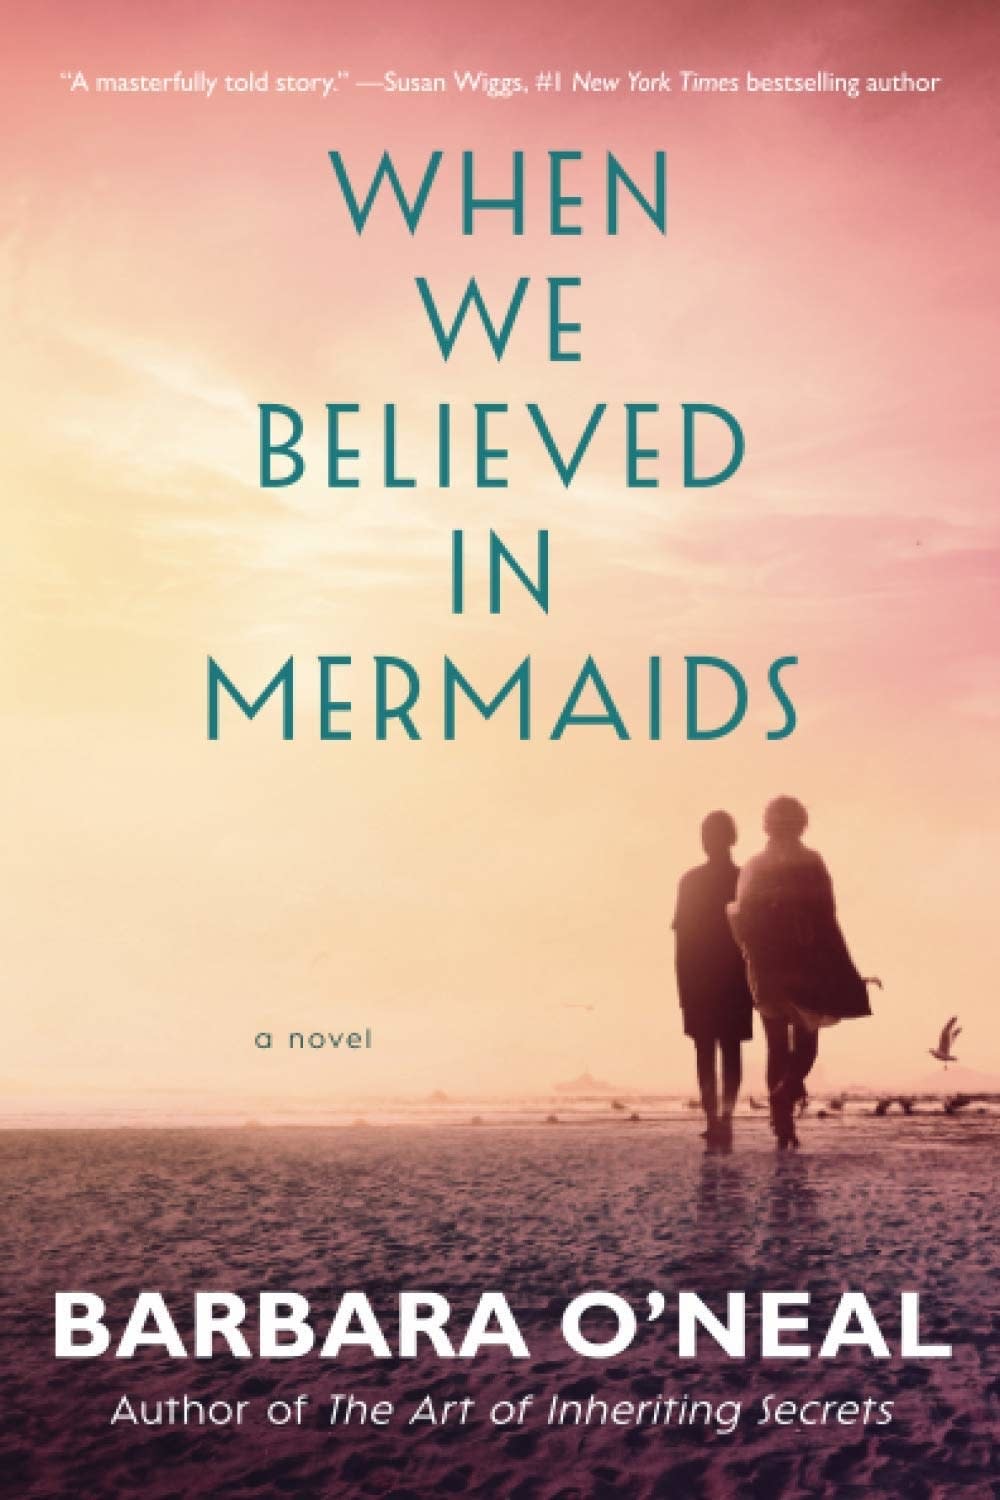 Book cover of "When we believed in mermaids"